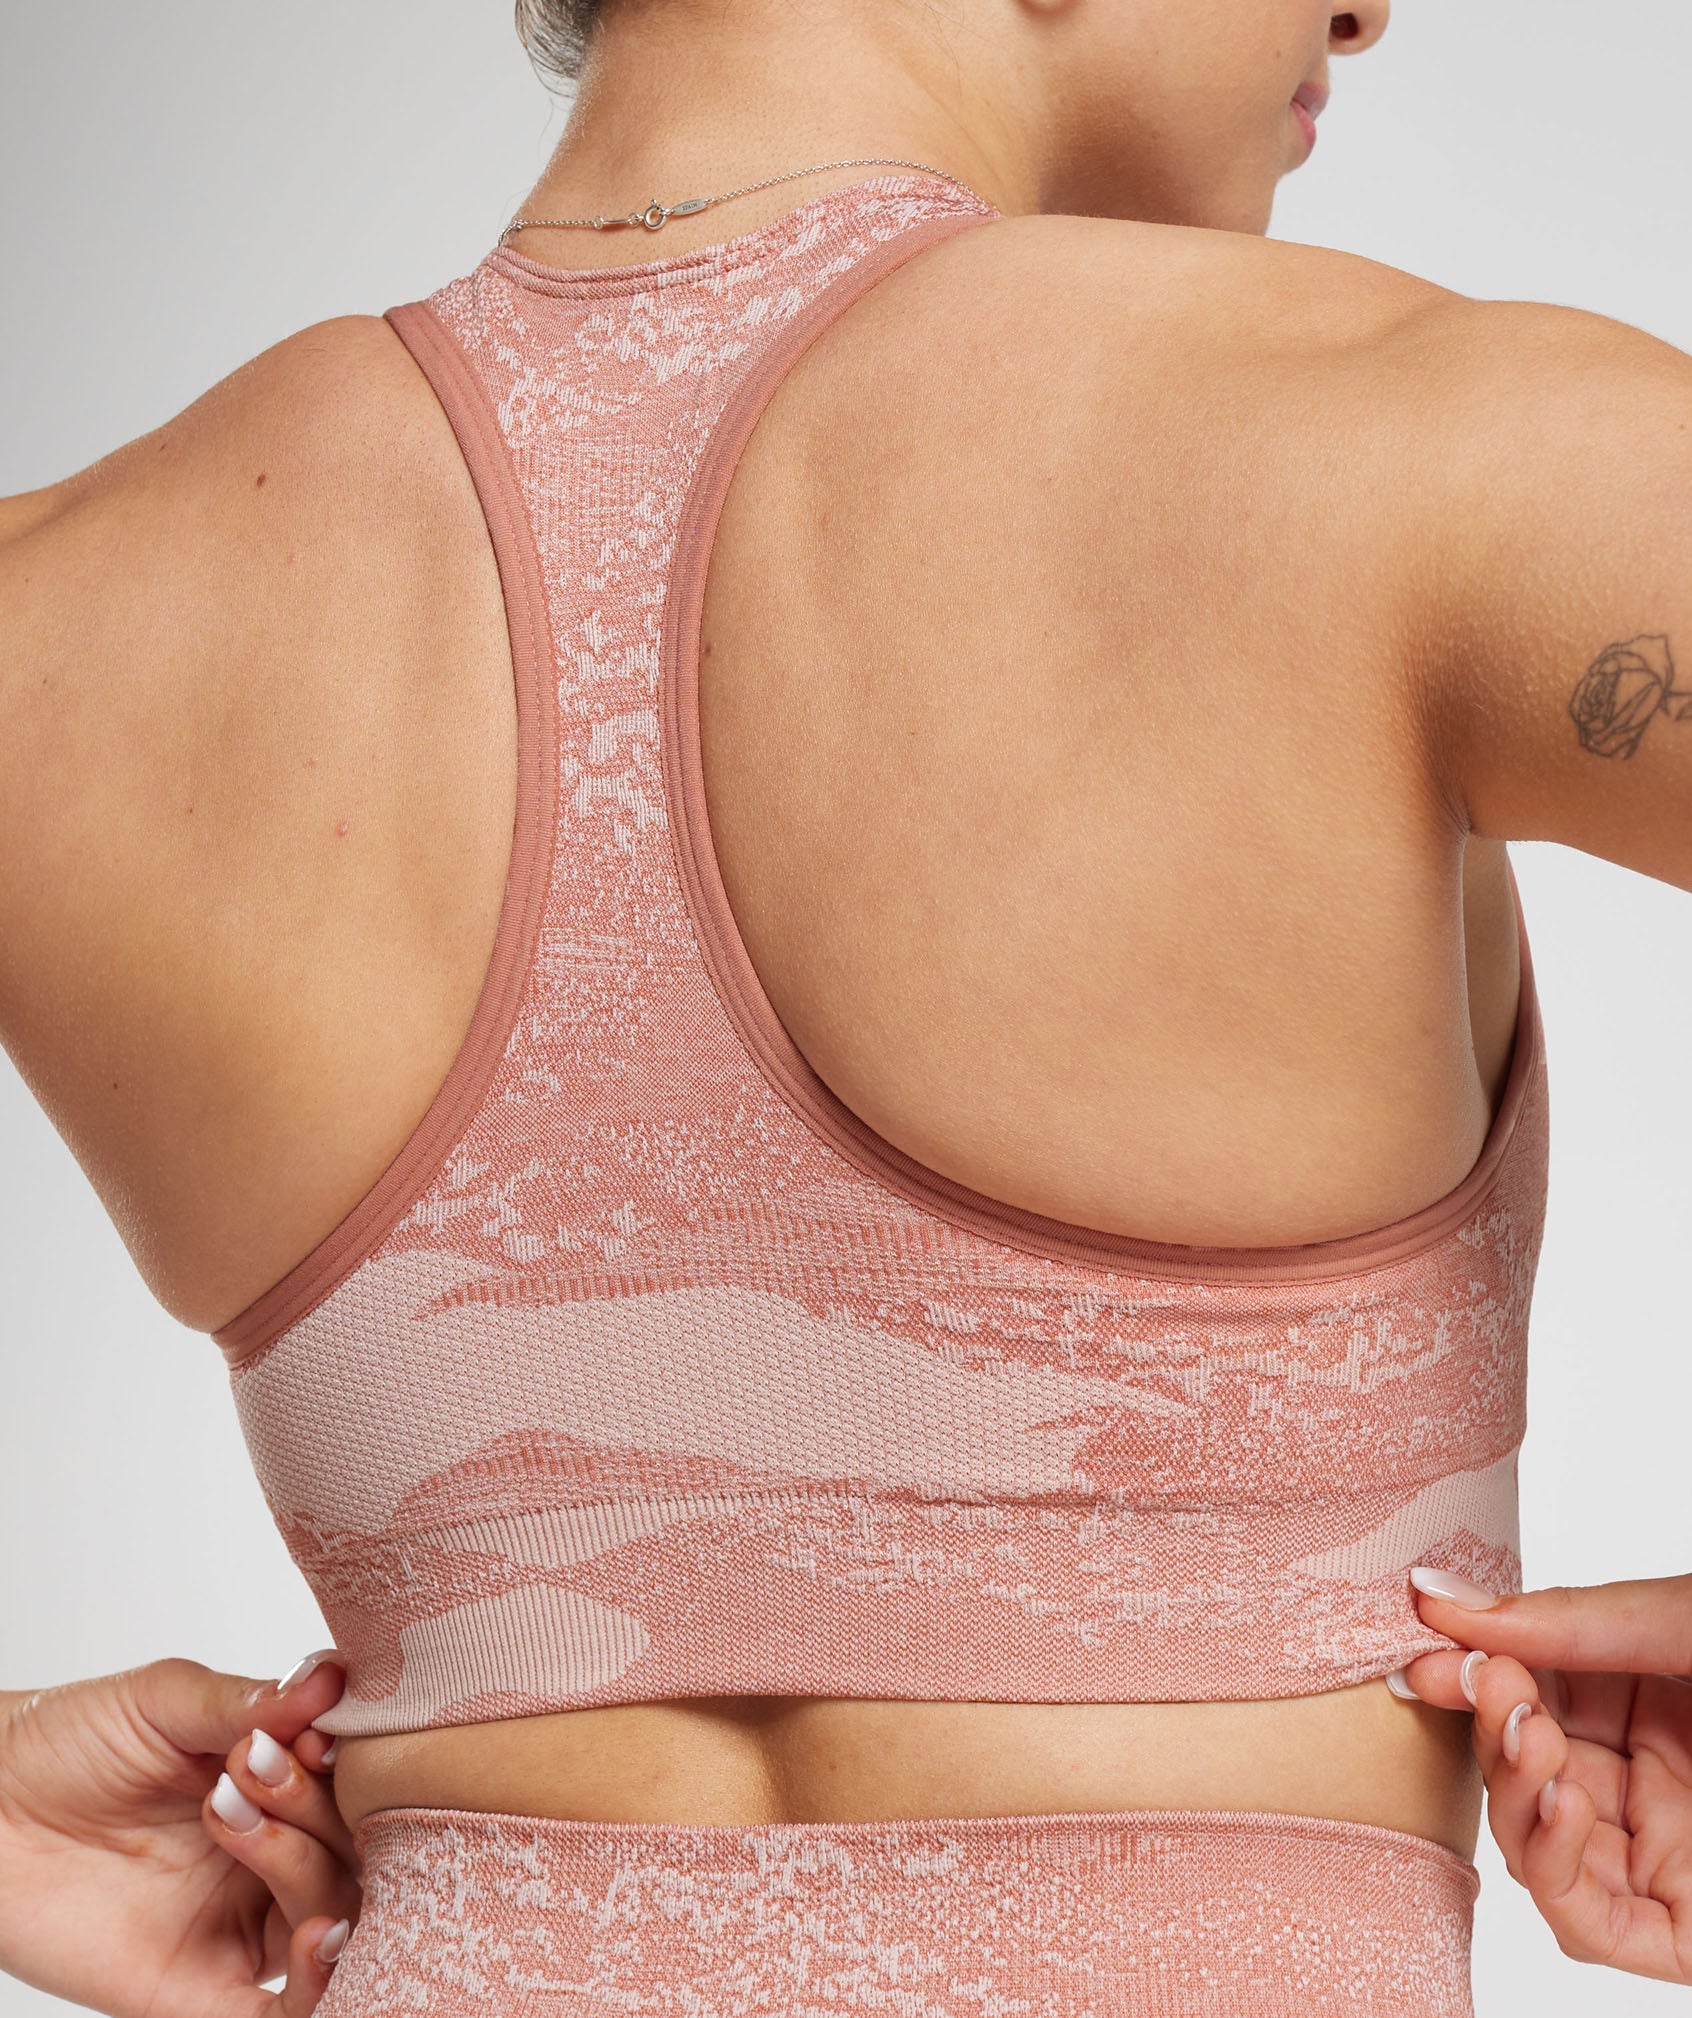 Gymshark pink sports bra size medium - $23 - From Tessa